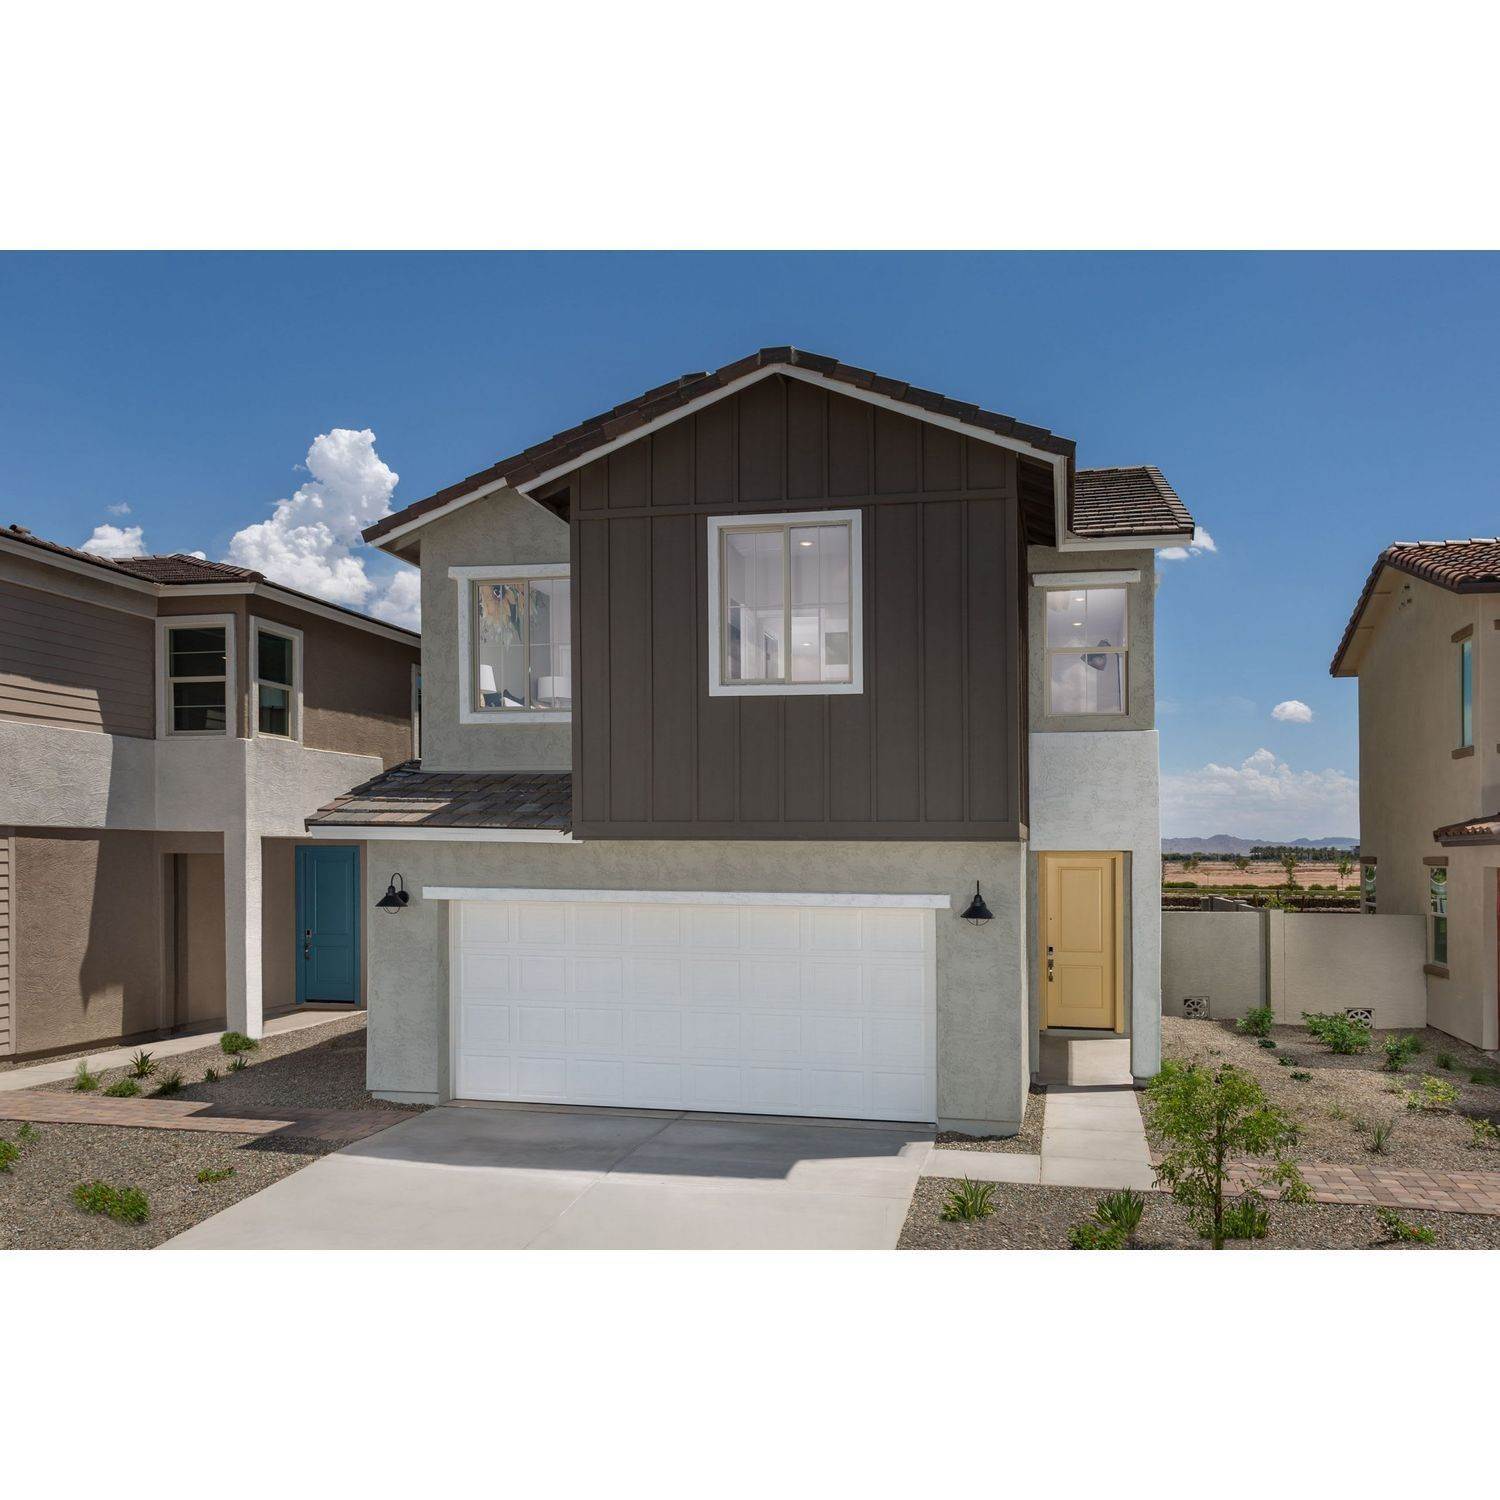 3. Single Family for Sale at Greenpointe At Eastmark 9349 E Solina Avenue, Mesa, AZ 85212